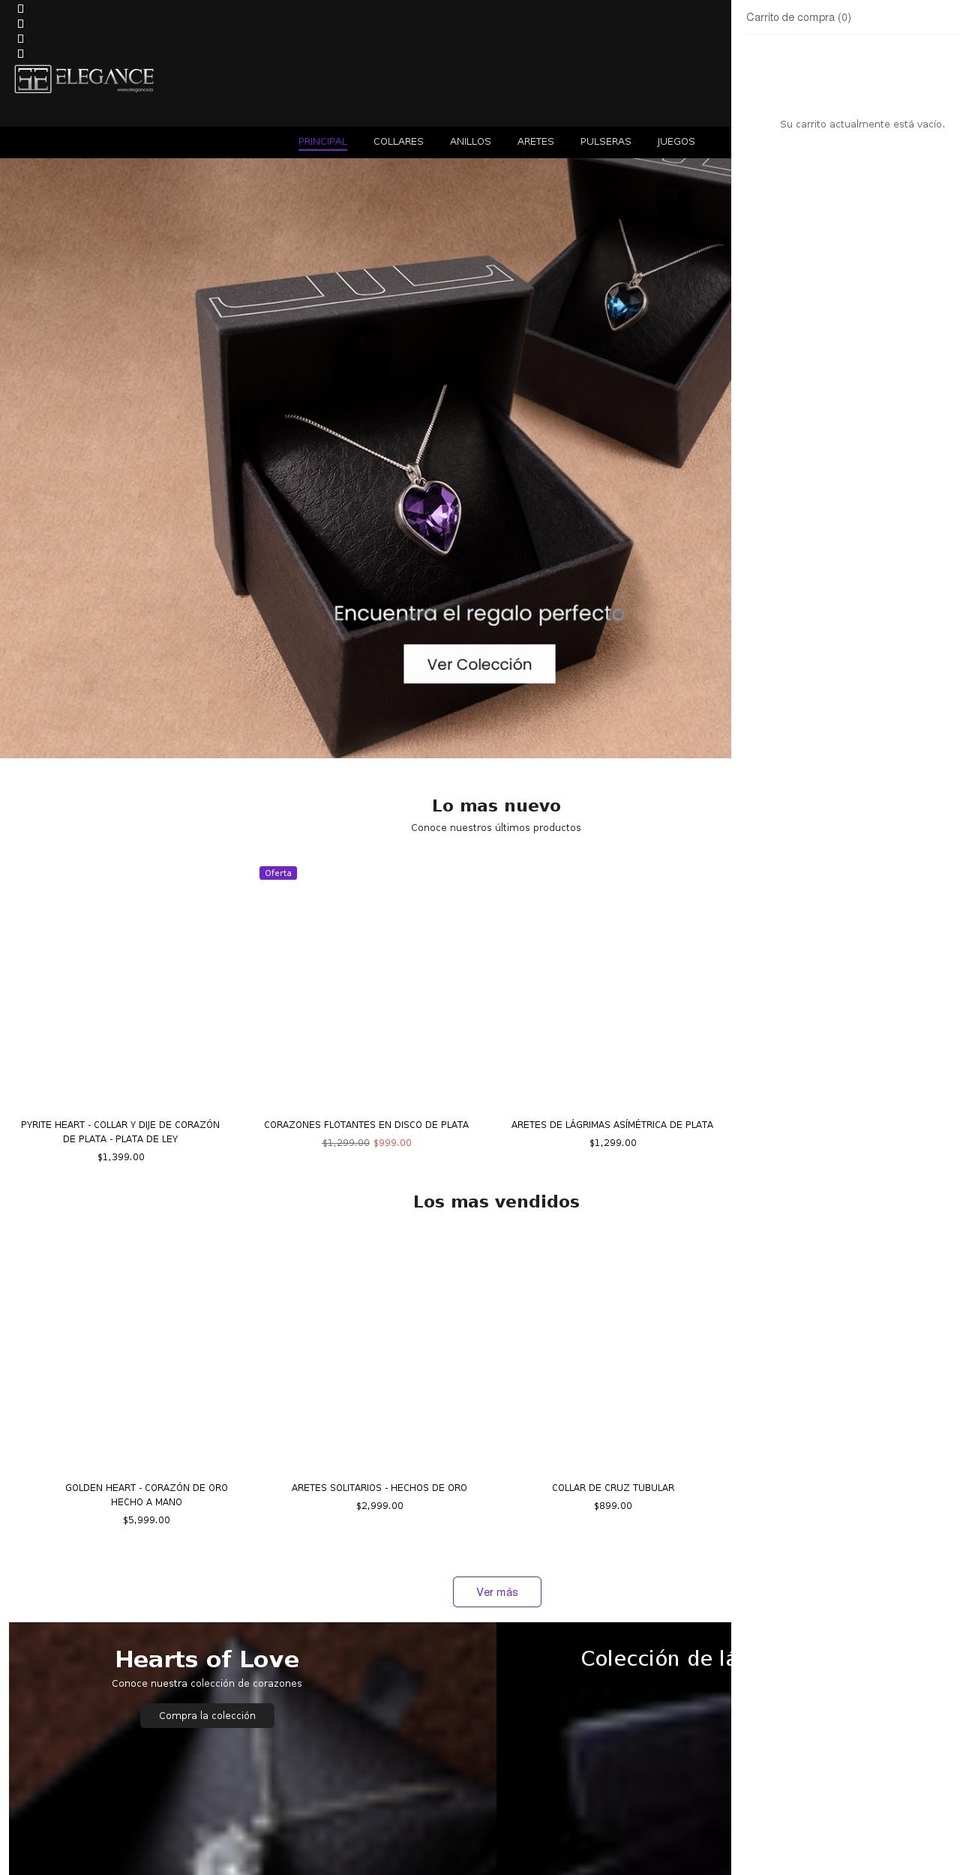 elegance.la shopify website screenshot